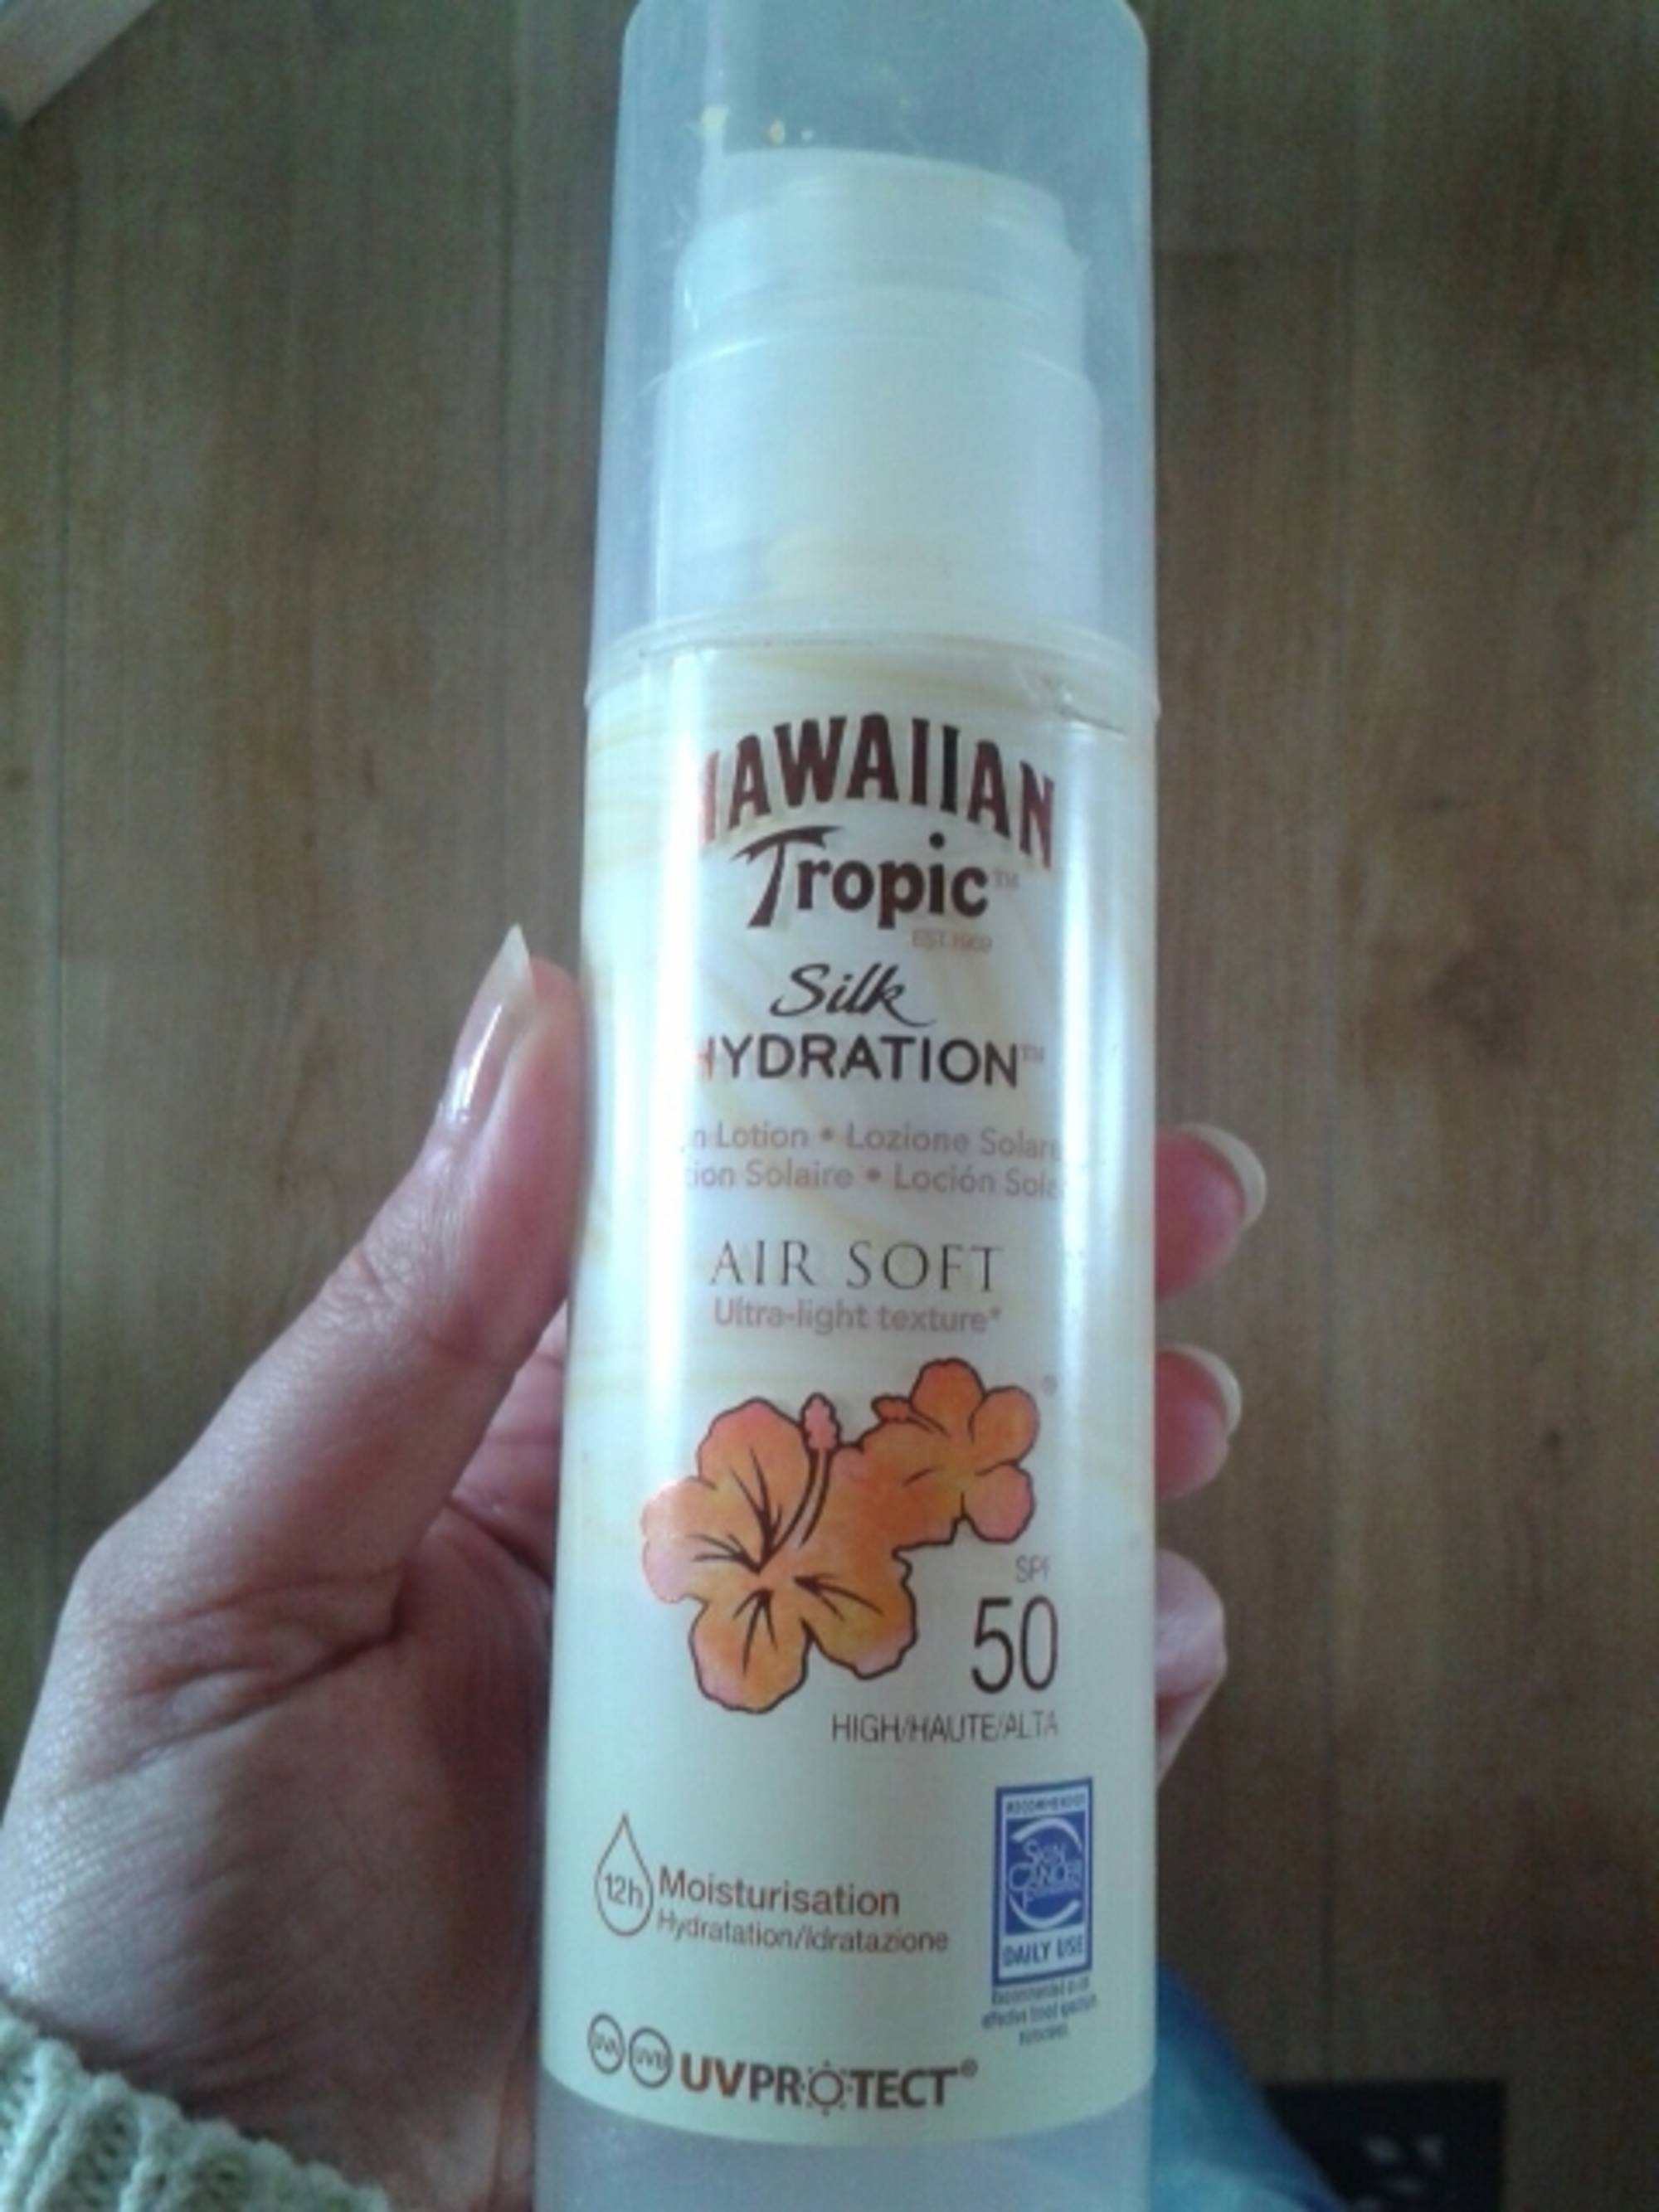 HAWAIIAN TROPIC - Silk hydration air soft SPF 50 - Lotion Solaire